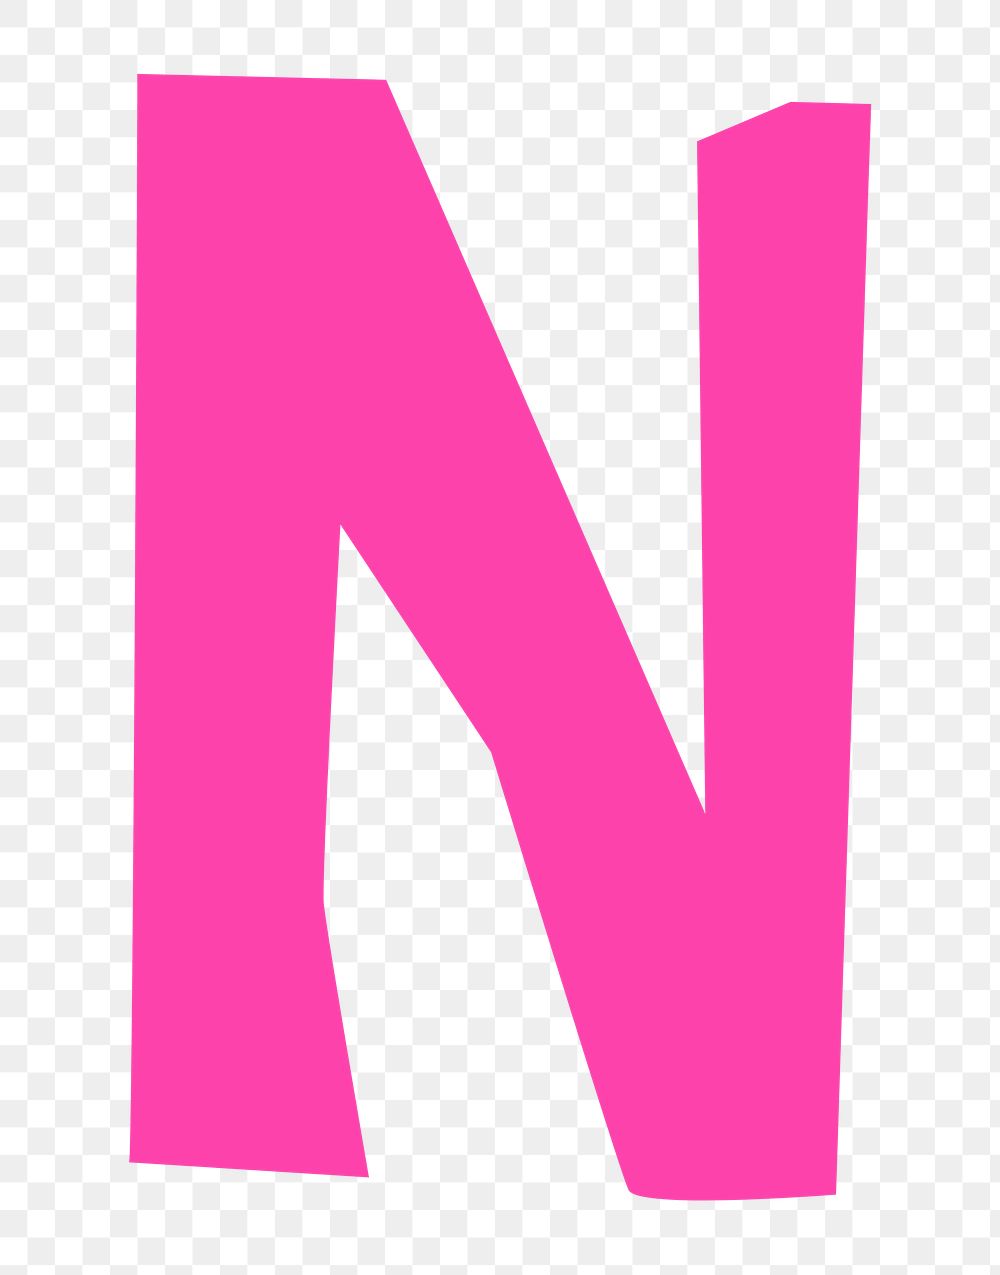 Letter N png in pink paper cut shape font, transparent background